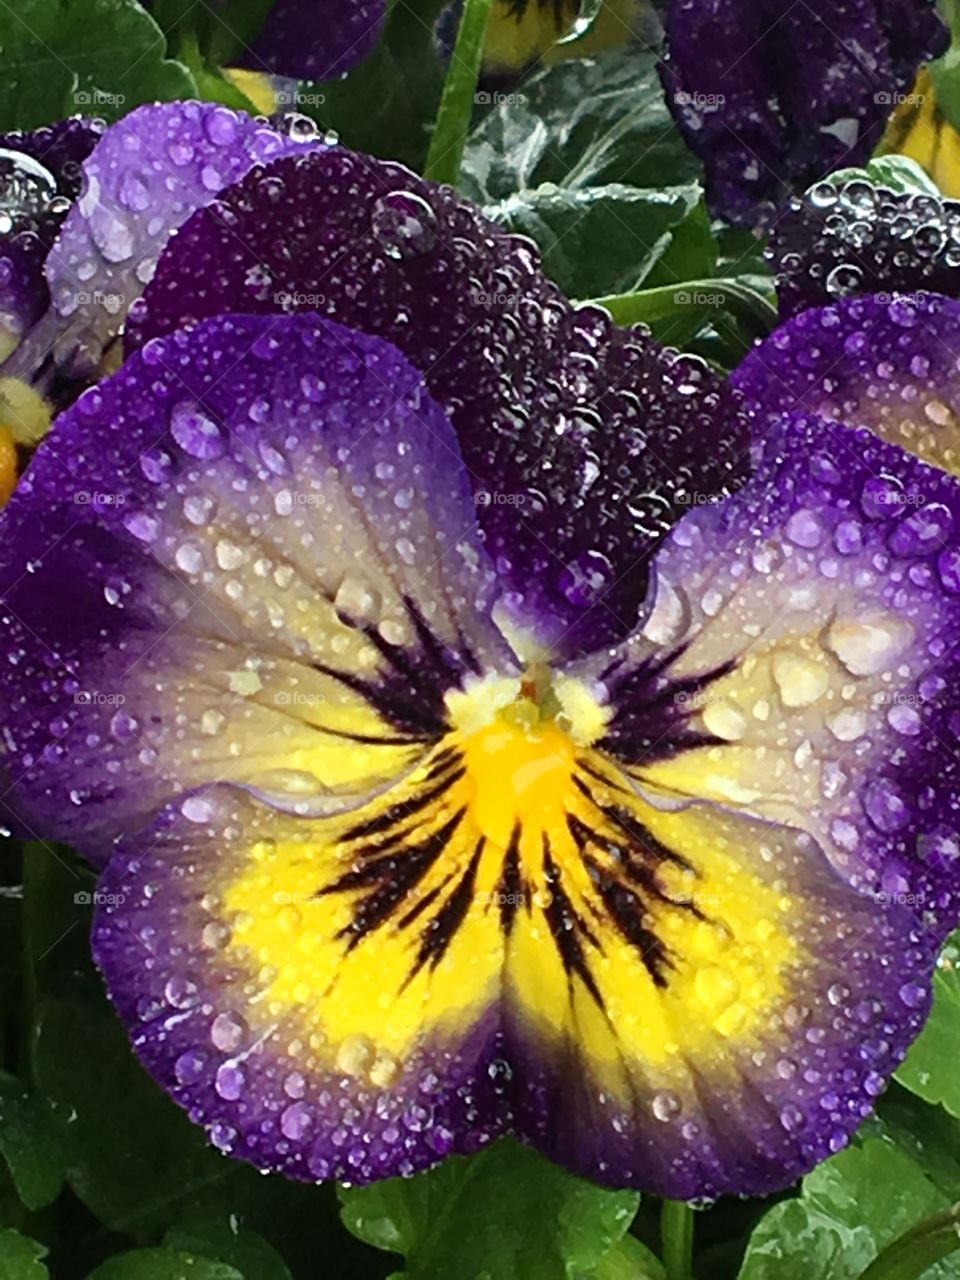 Purple & Yellow pansy kisses with rain drops